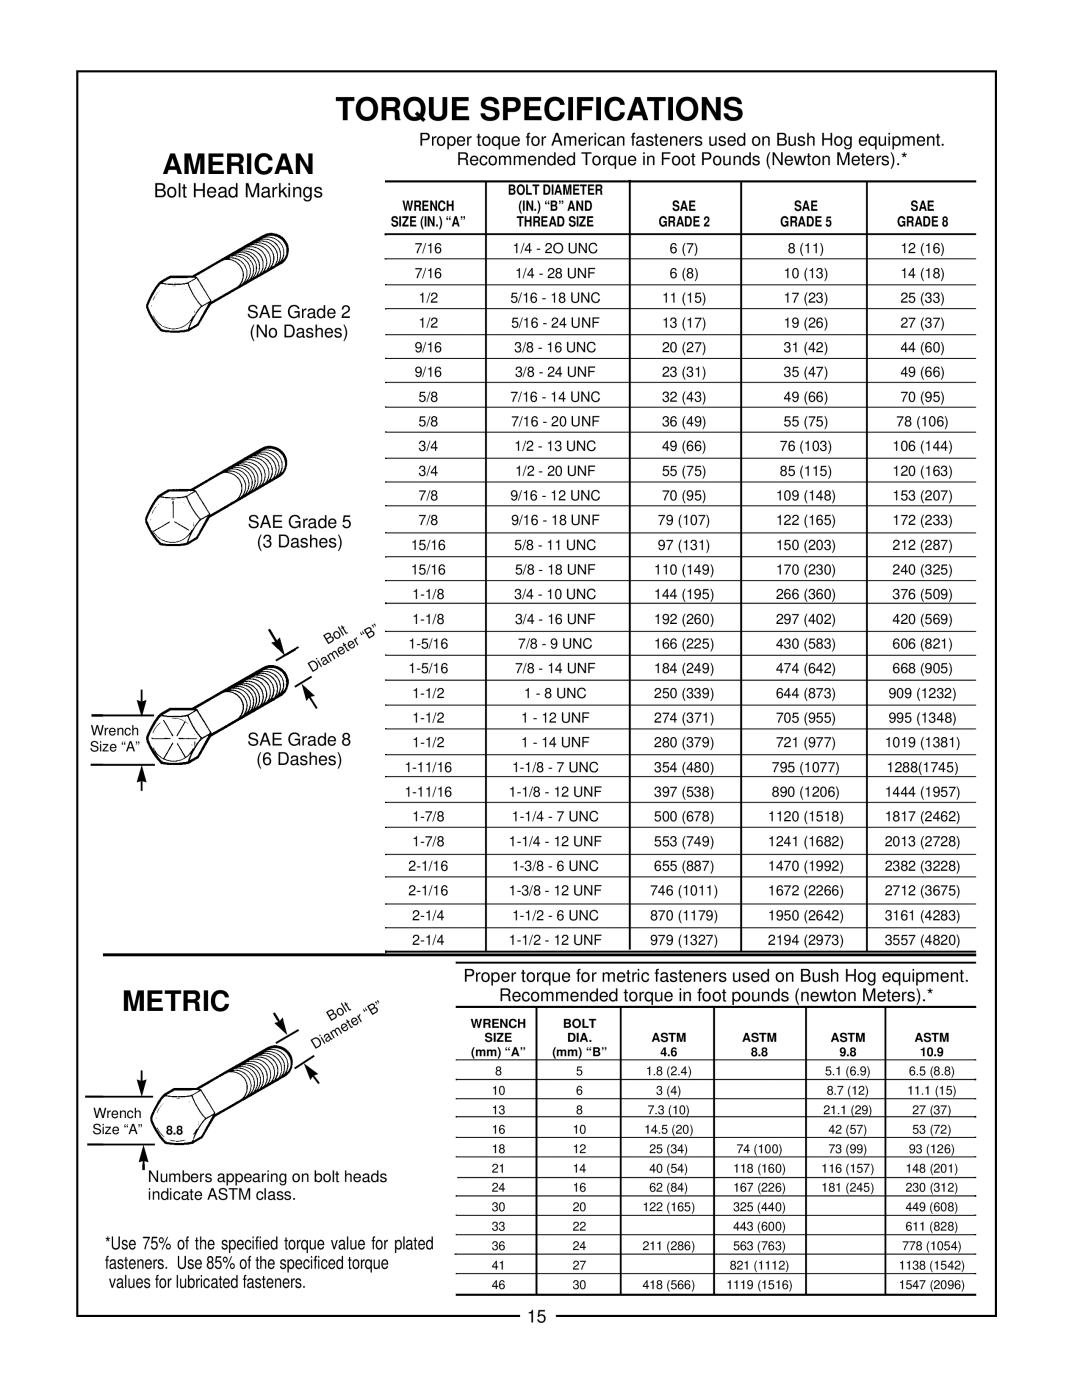 Bush Hog TD-1100 manual Torque Specifications, American, Metric, Bolt Head Markings 